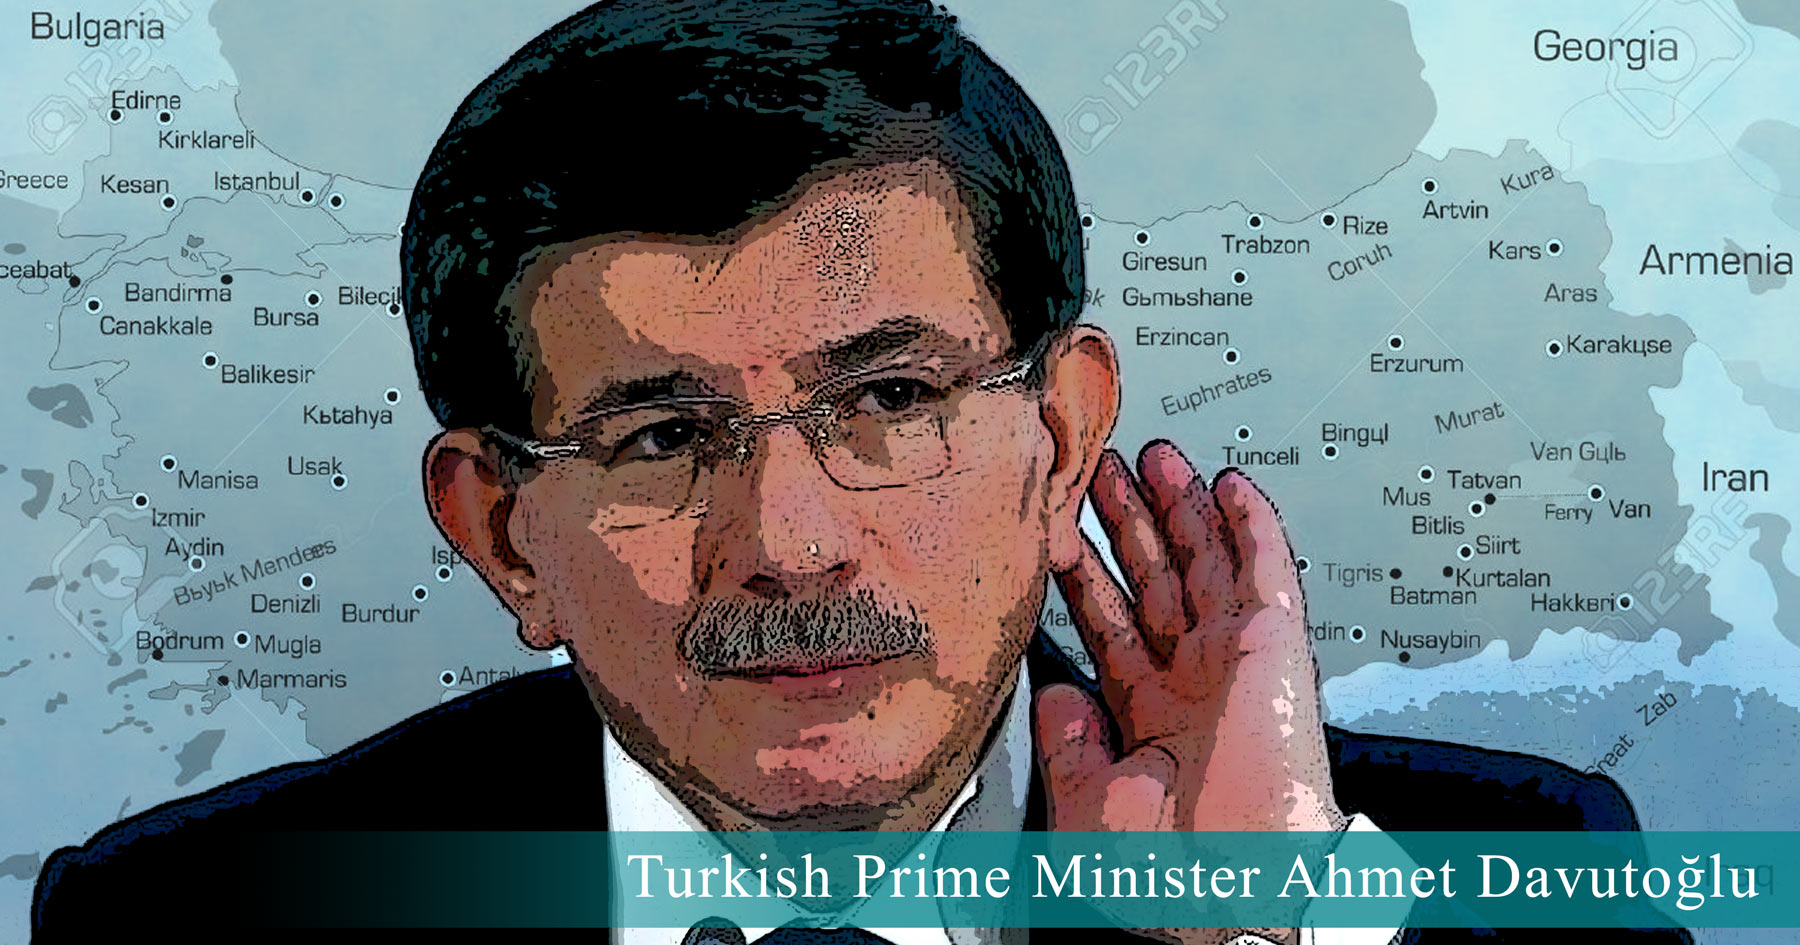 turkey, Ahmet Davutoğlu, free stuff, Bernie Sanders, illustration, Paul Jacob, Common Sense